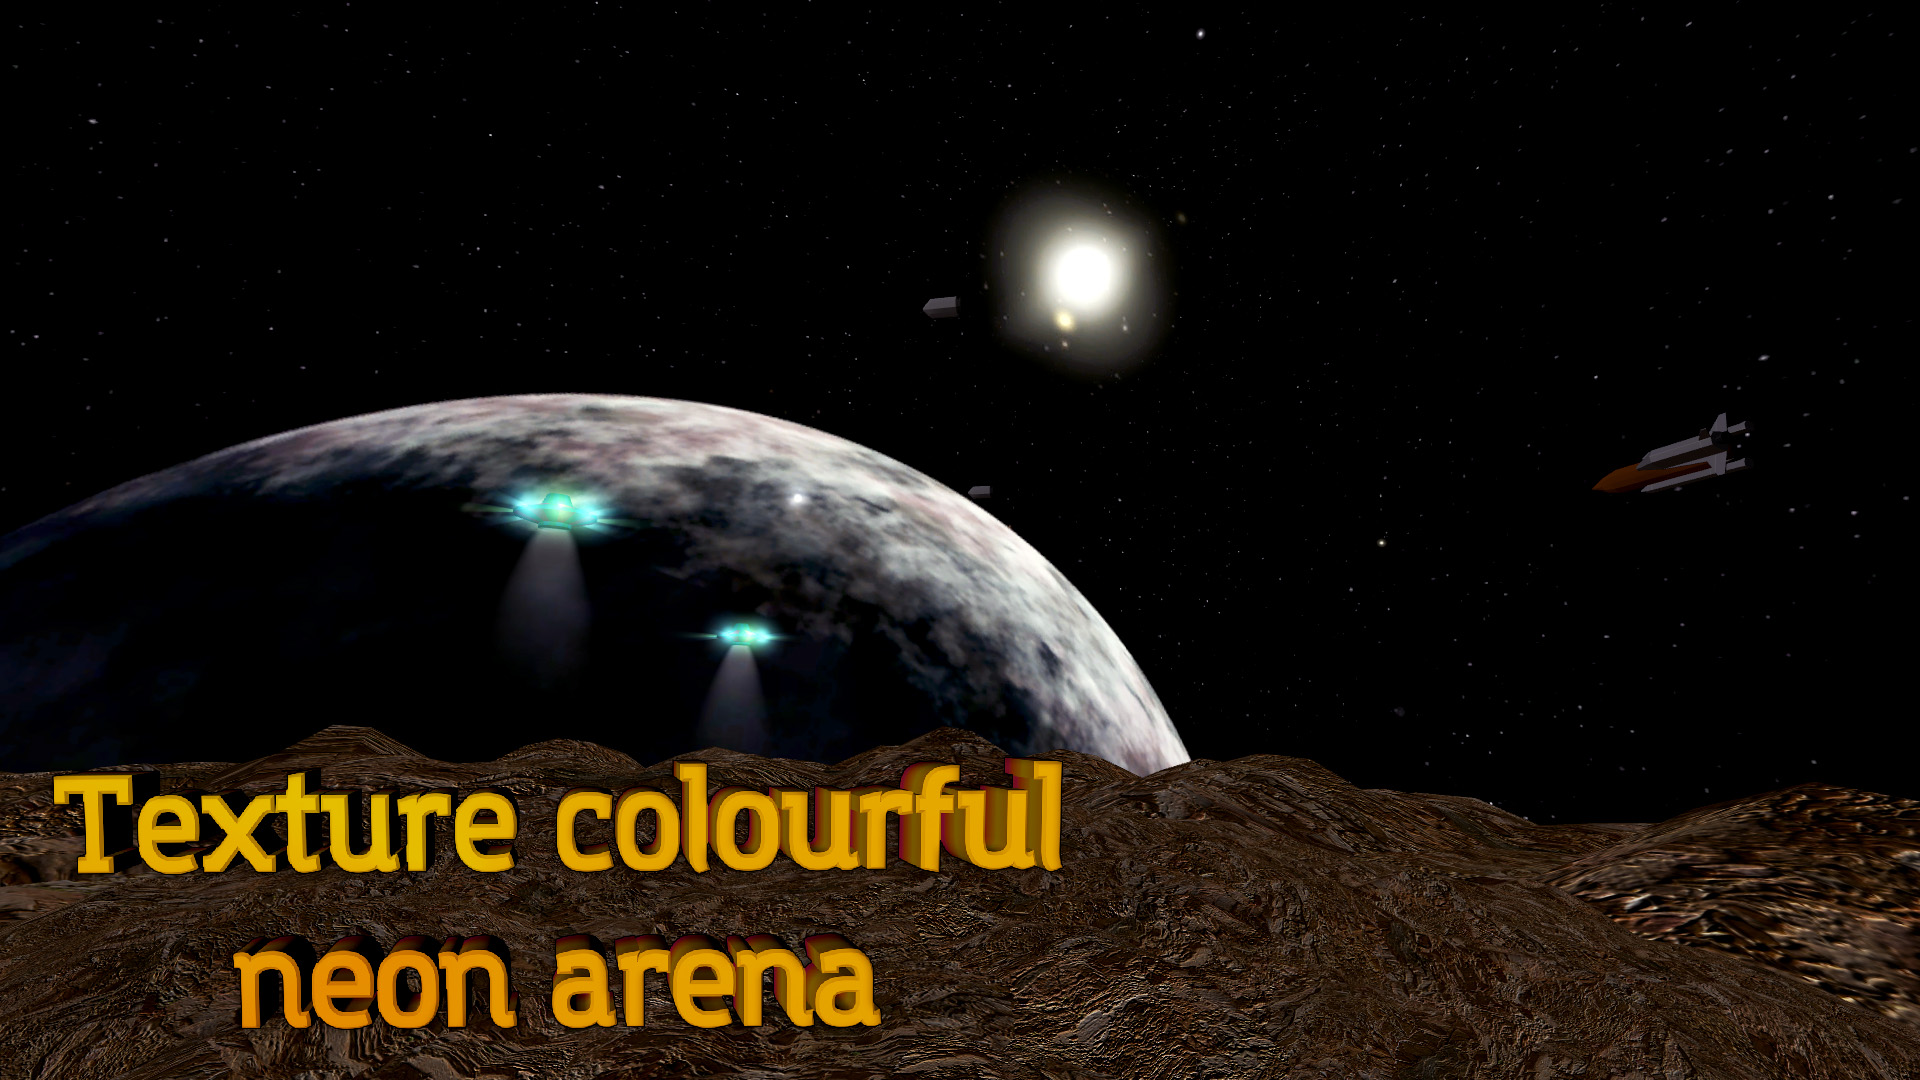 aim_ag_texture_colourful_neon_arena